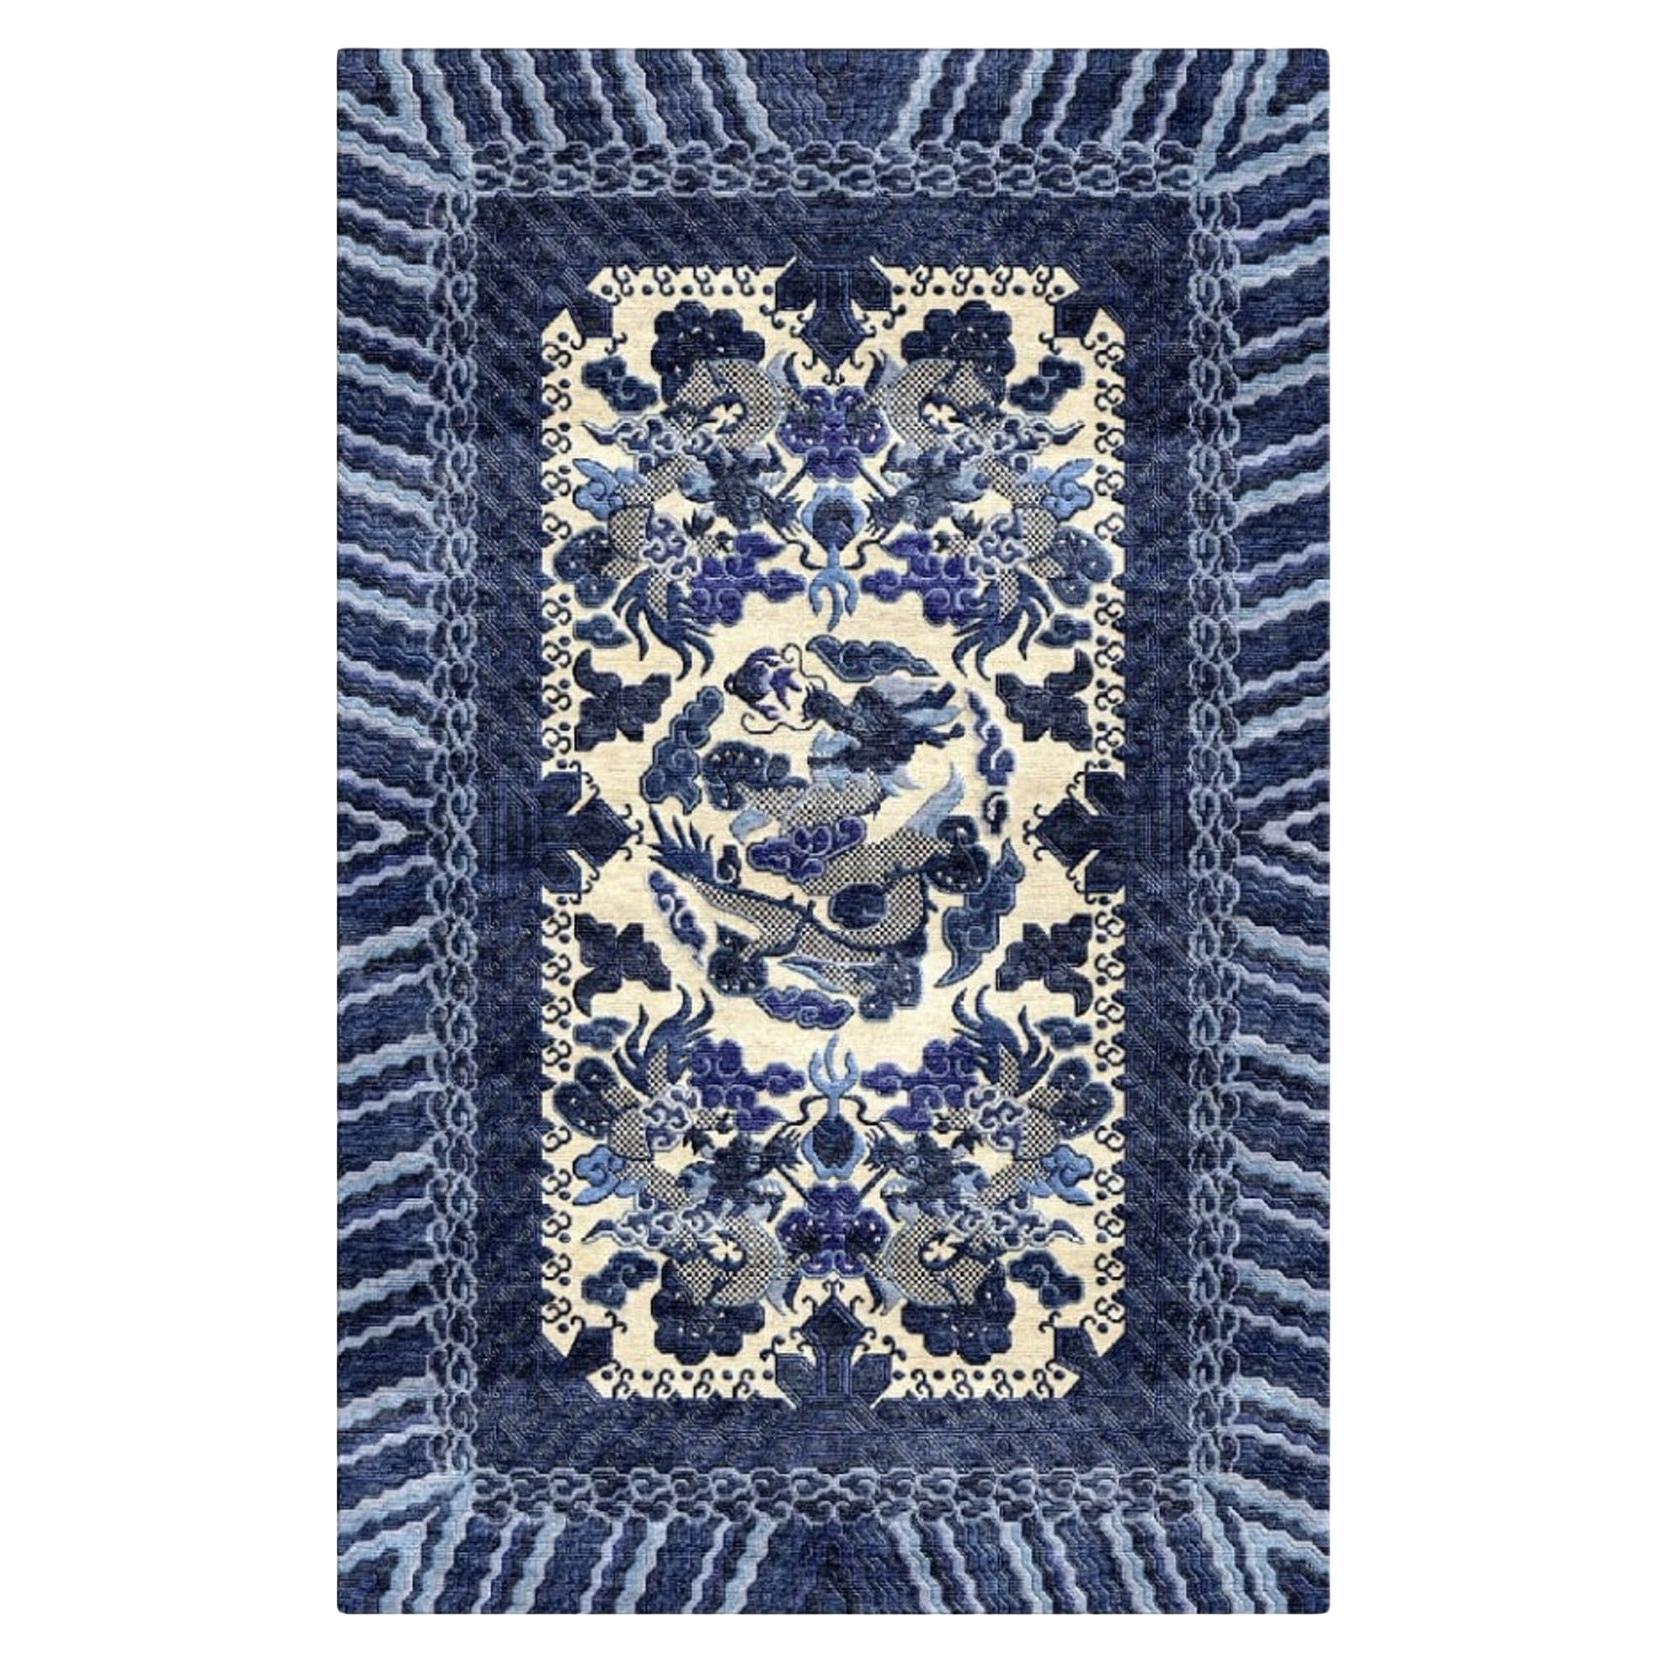 Dragon Rug Wool Silk Style Chinese Imperial Carpet Blue Beige, Djoharian Design